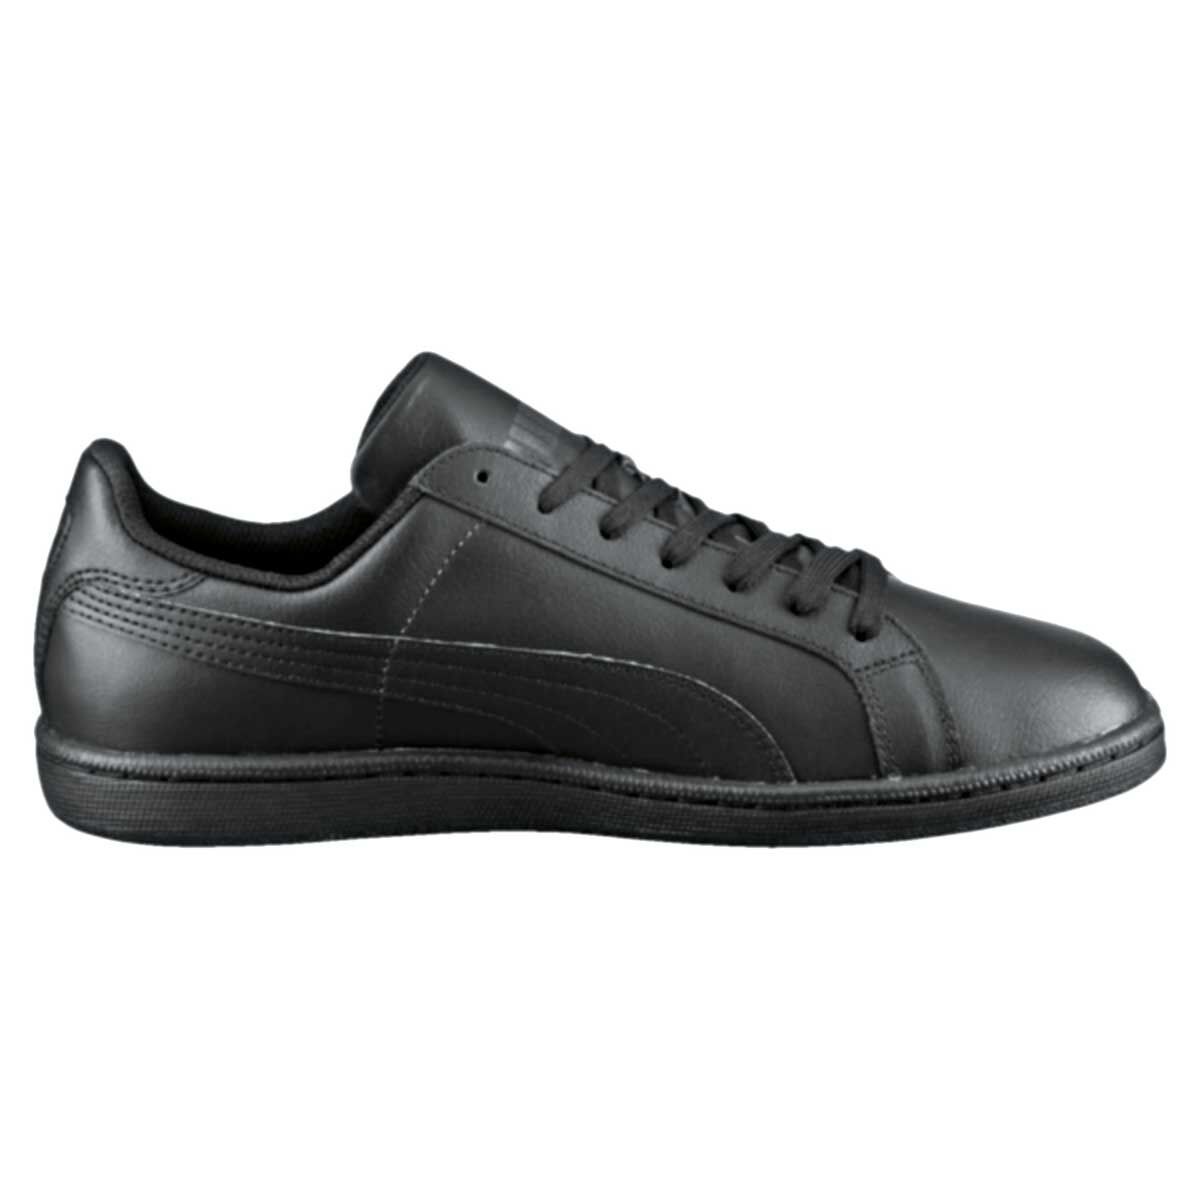 Puma Smash Mens Casual Shoes Black US 9 